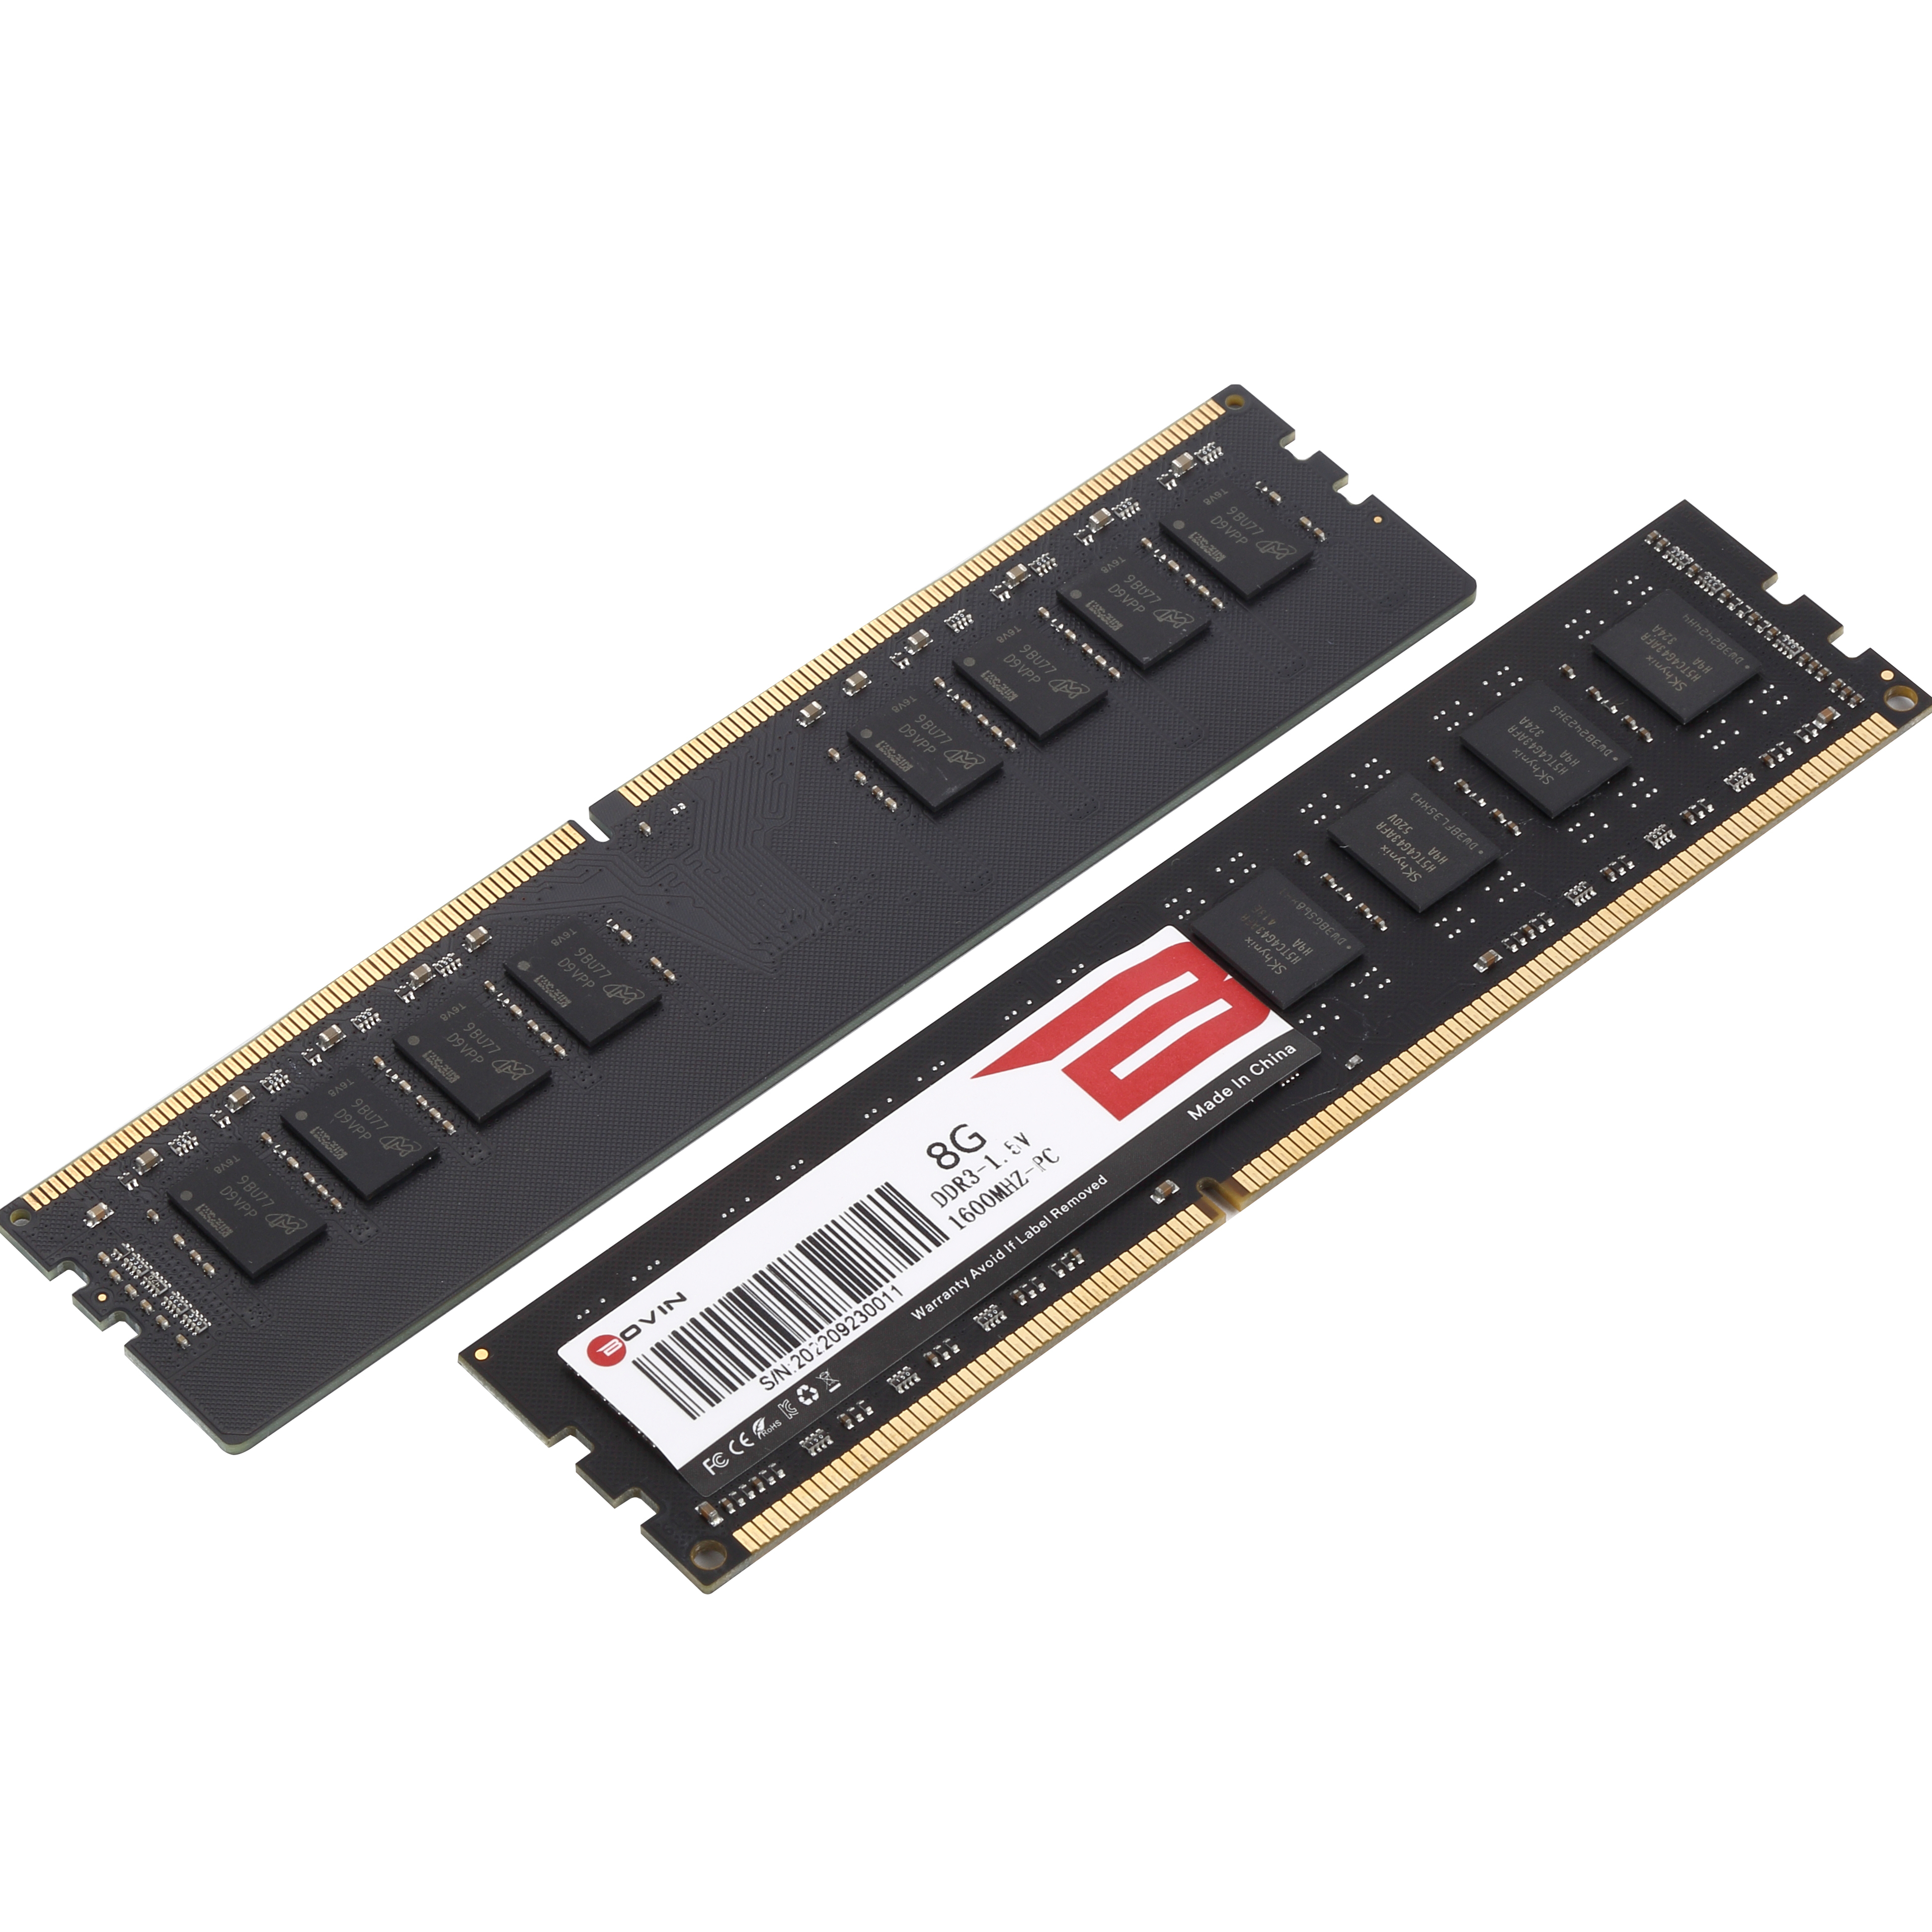 BOVIN Brand Desktop RAM 8G DDR3 1.5V 1600MHZ-PC 